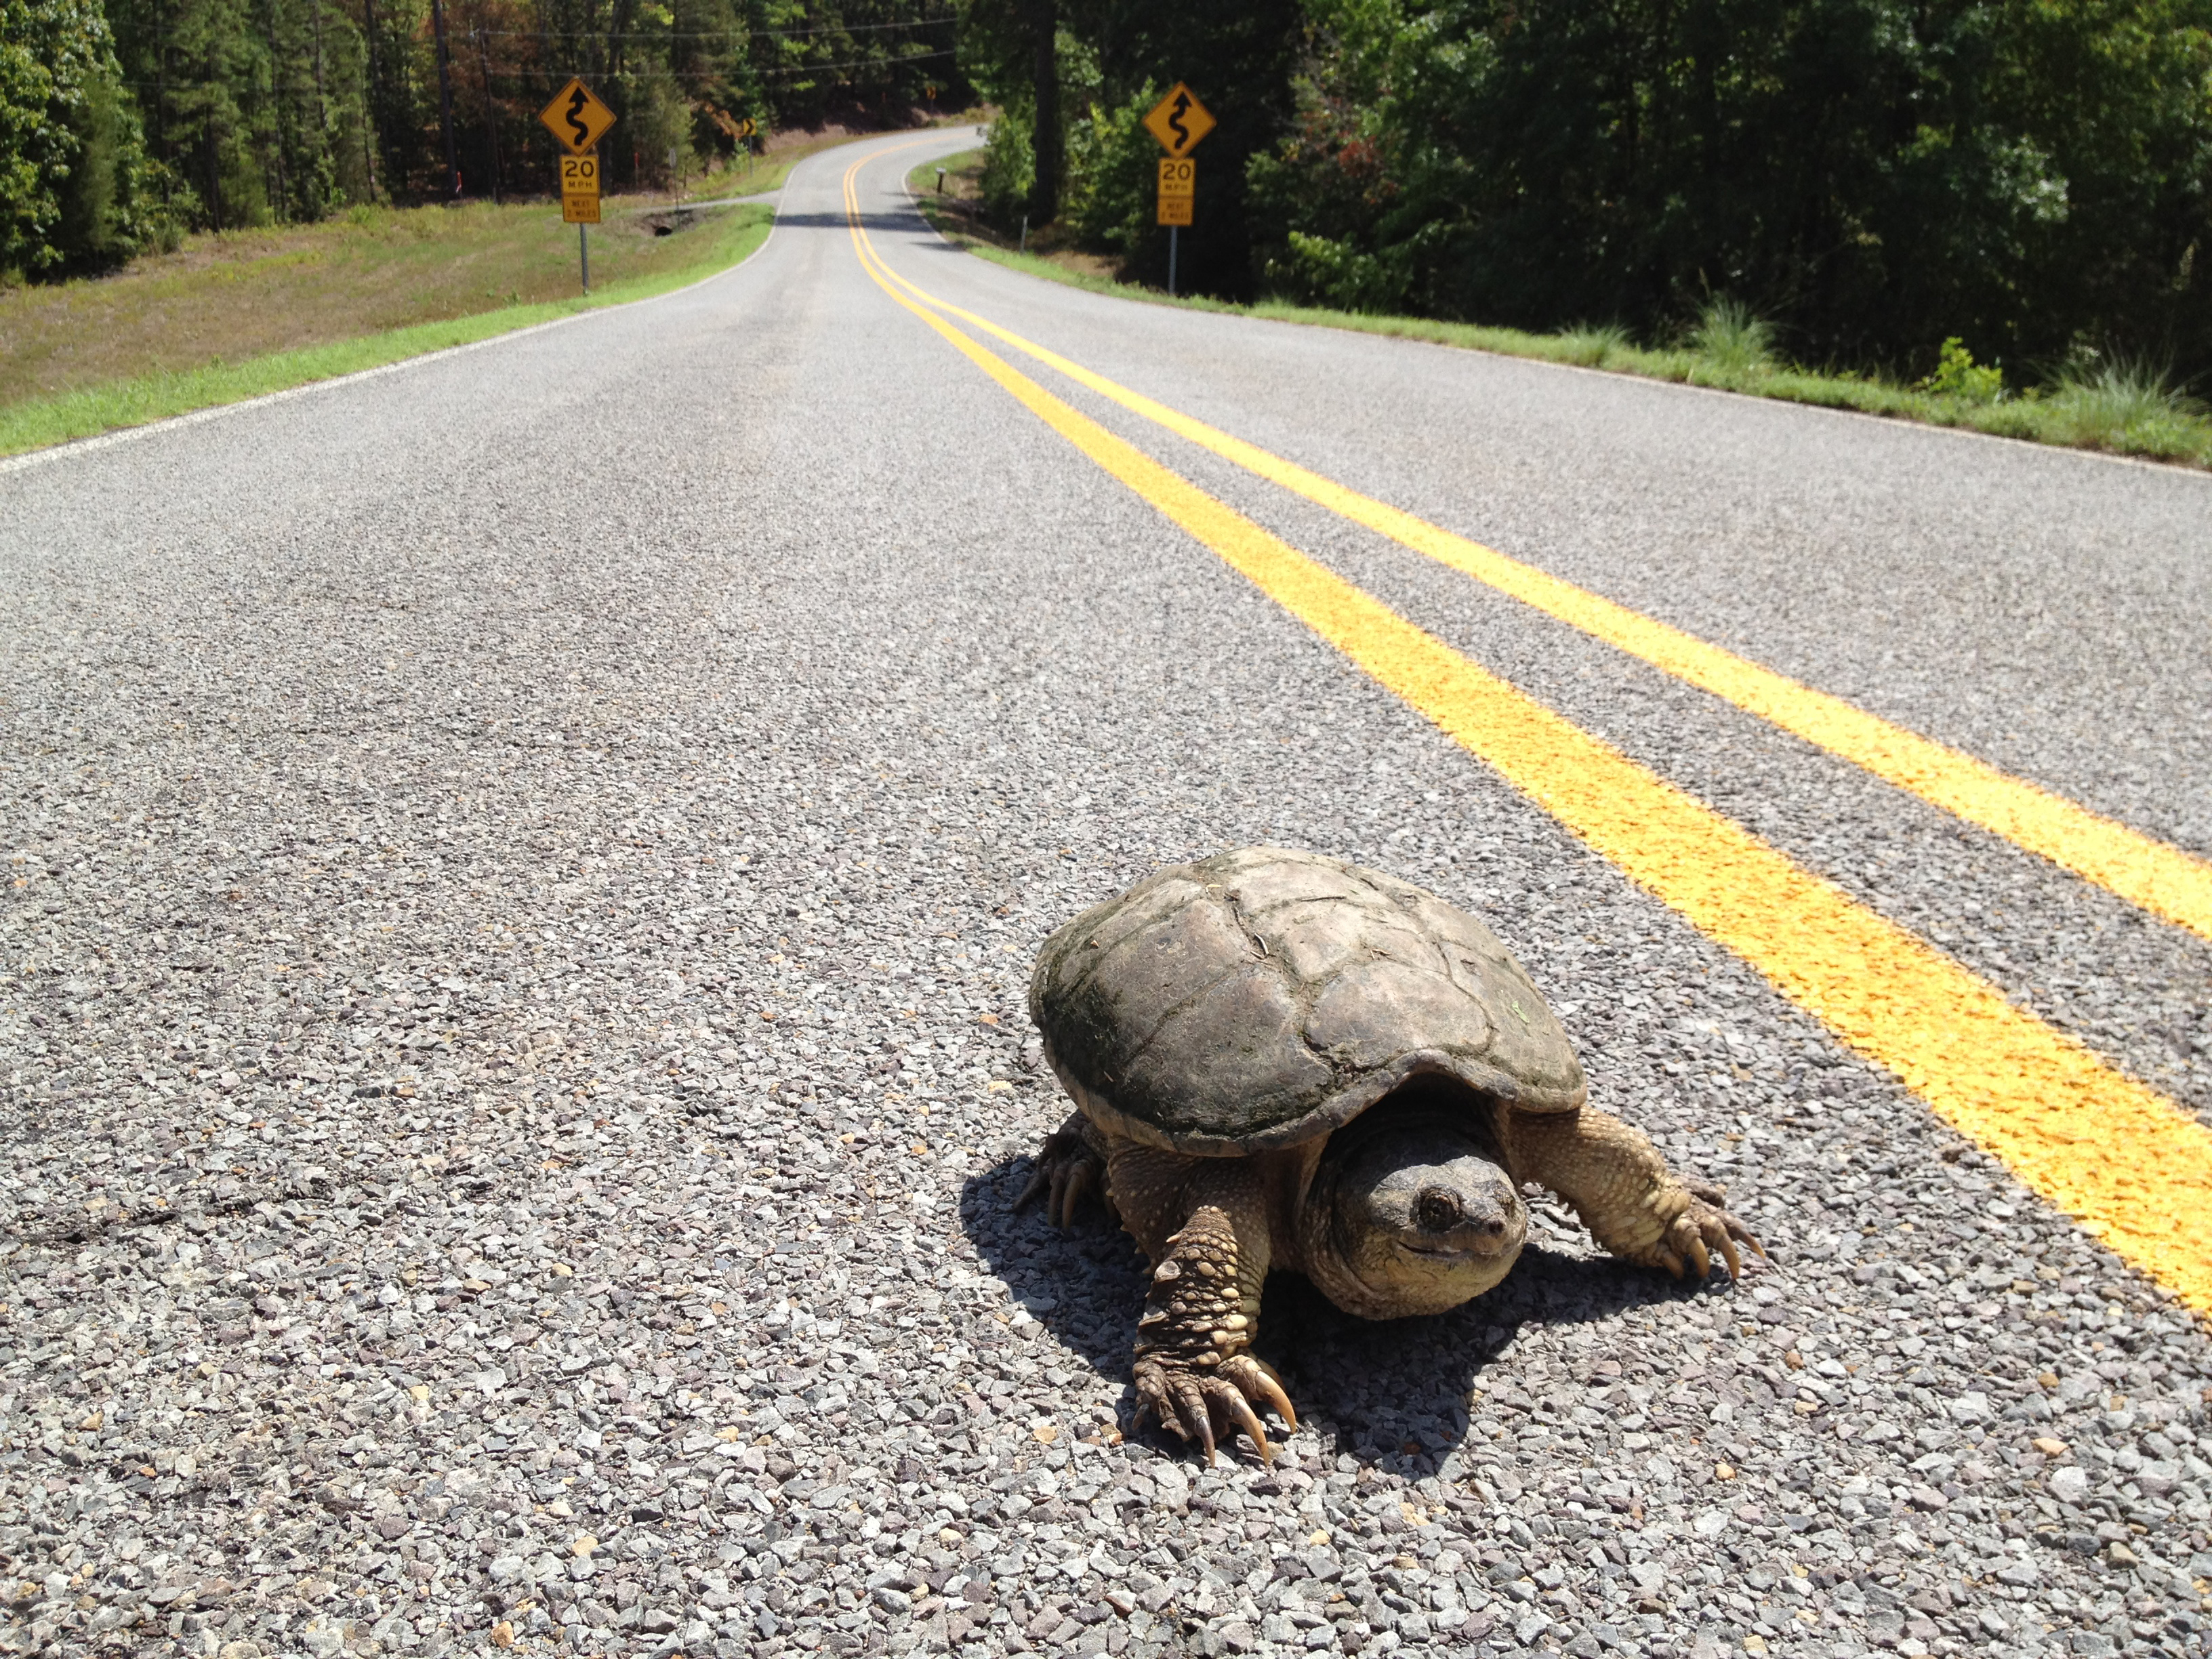 Вперед в черепахе. Черепаха на дороге. Черепаха ползет. Медленная черепаха. Черепаха в движении.